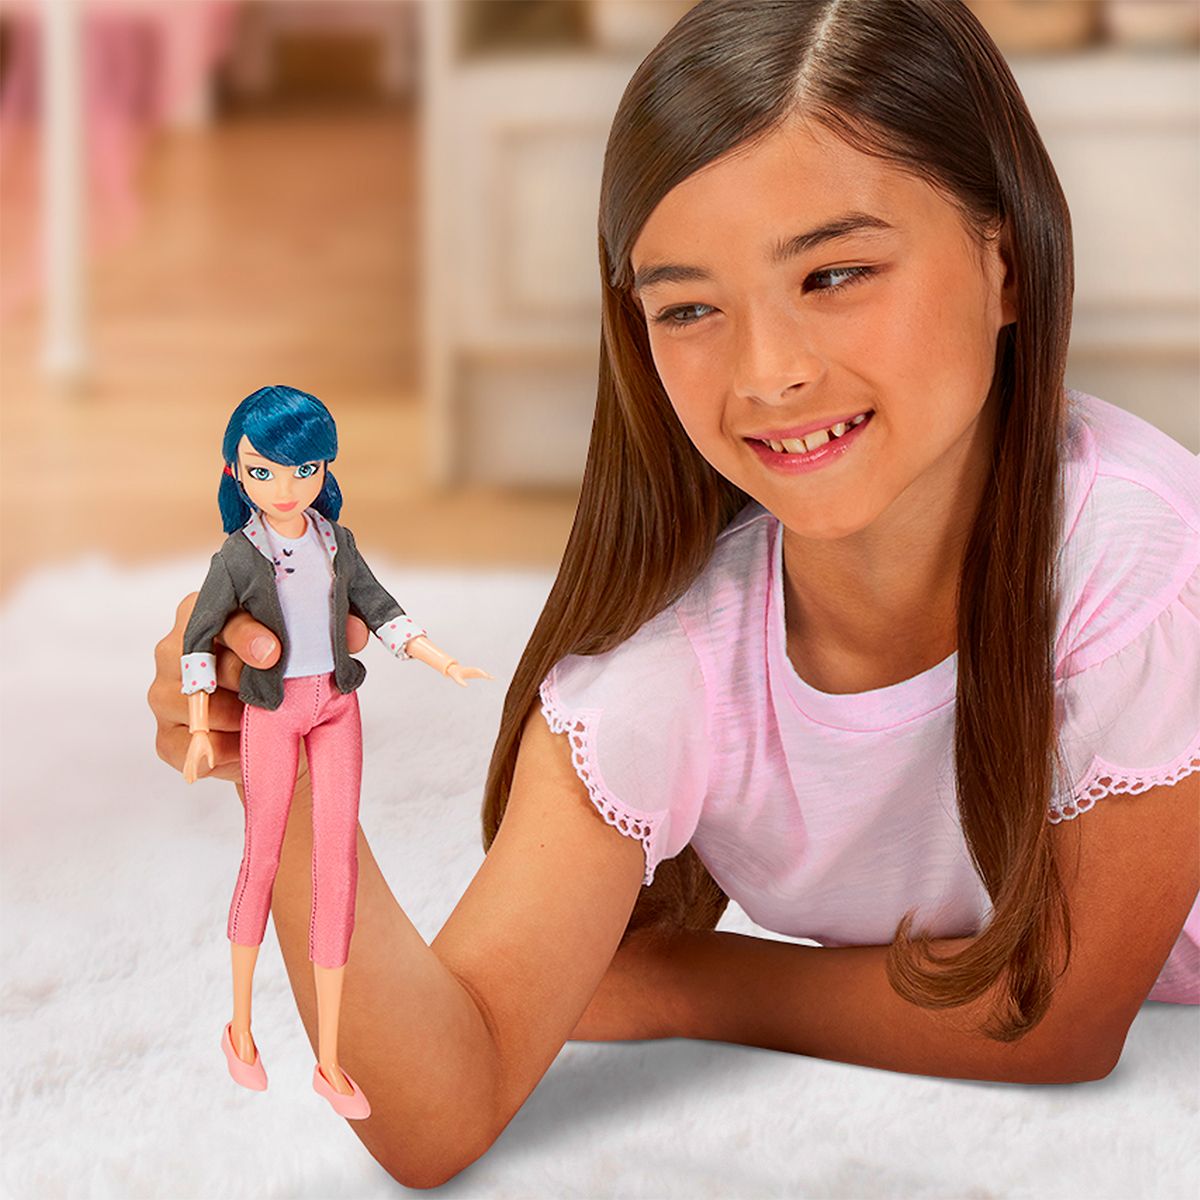 Кукла "Леди-Баг и Супер-Кит" S2 - Маринет, 26 см, с аксессуарами